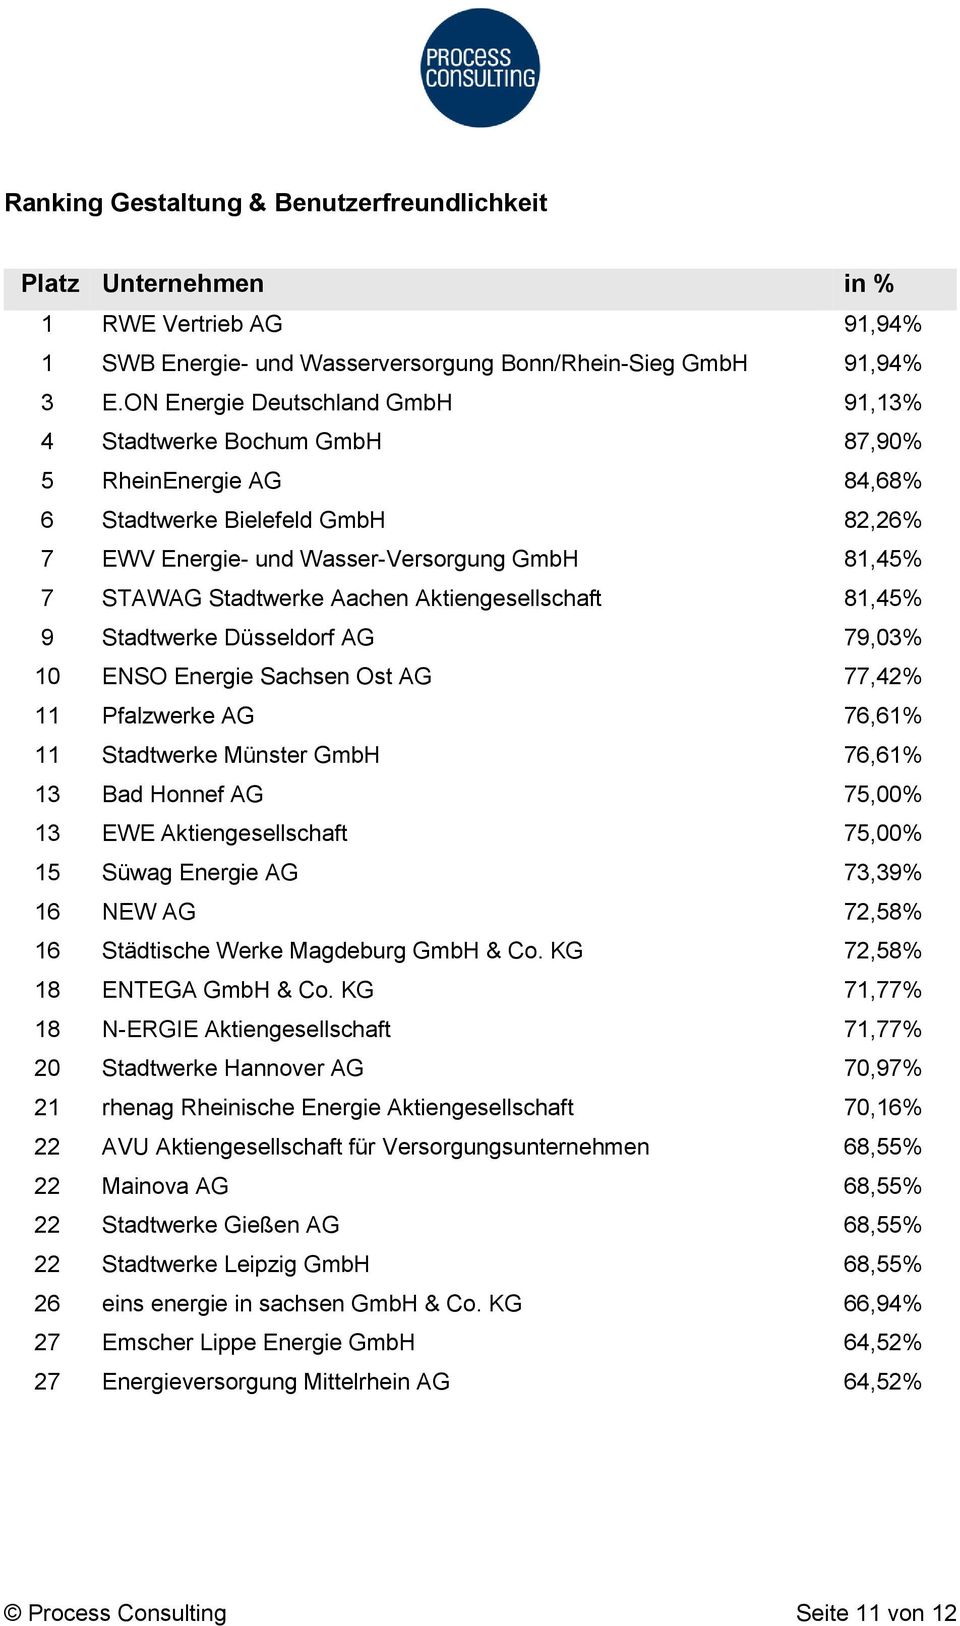 Aachen Aktiengesellschaft 81,45% 9 Stadtwerke Düsseldorf AG 79,03% 10 ENSO Energie Sachsen Ost AG 77,42% 11 Pfalzwerke AG 76,61% 11 Stadtwerke Münster GmbH 76,61% 13 Bad Honnef AG 75,00% 13 EWE